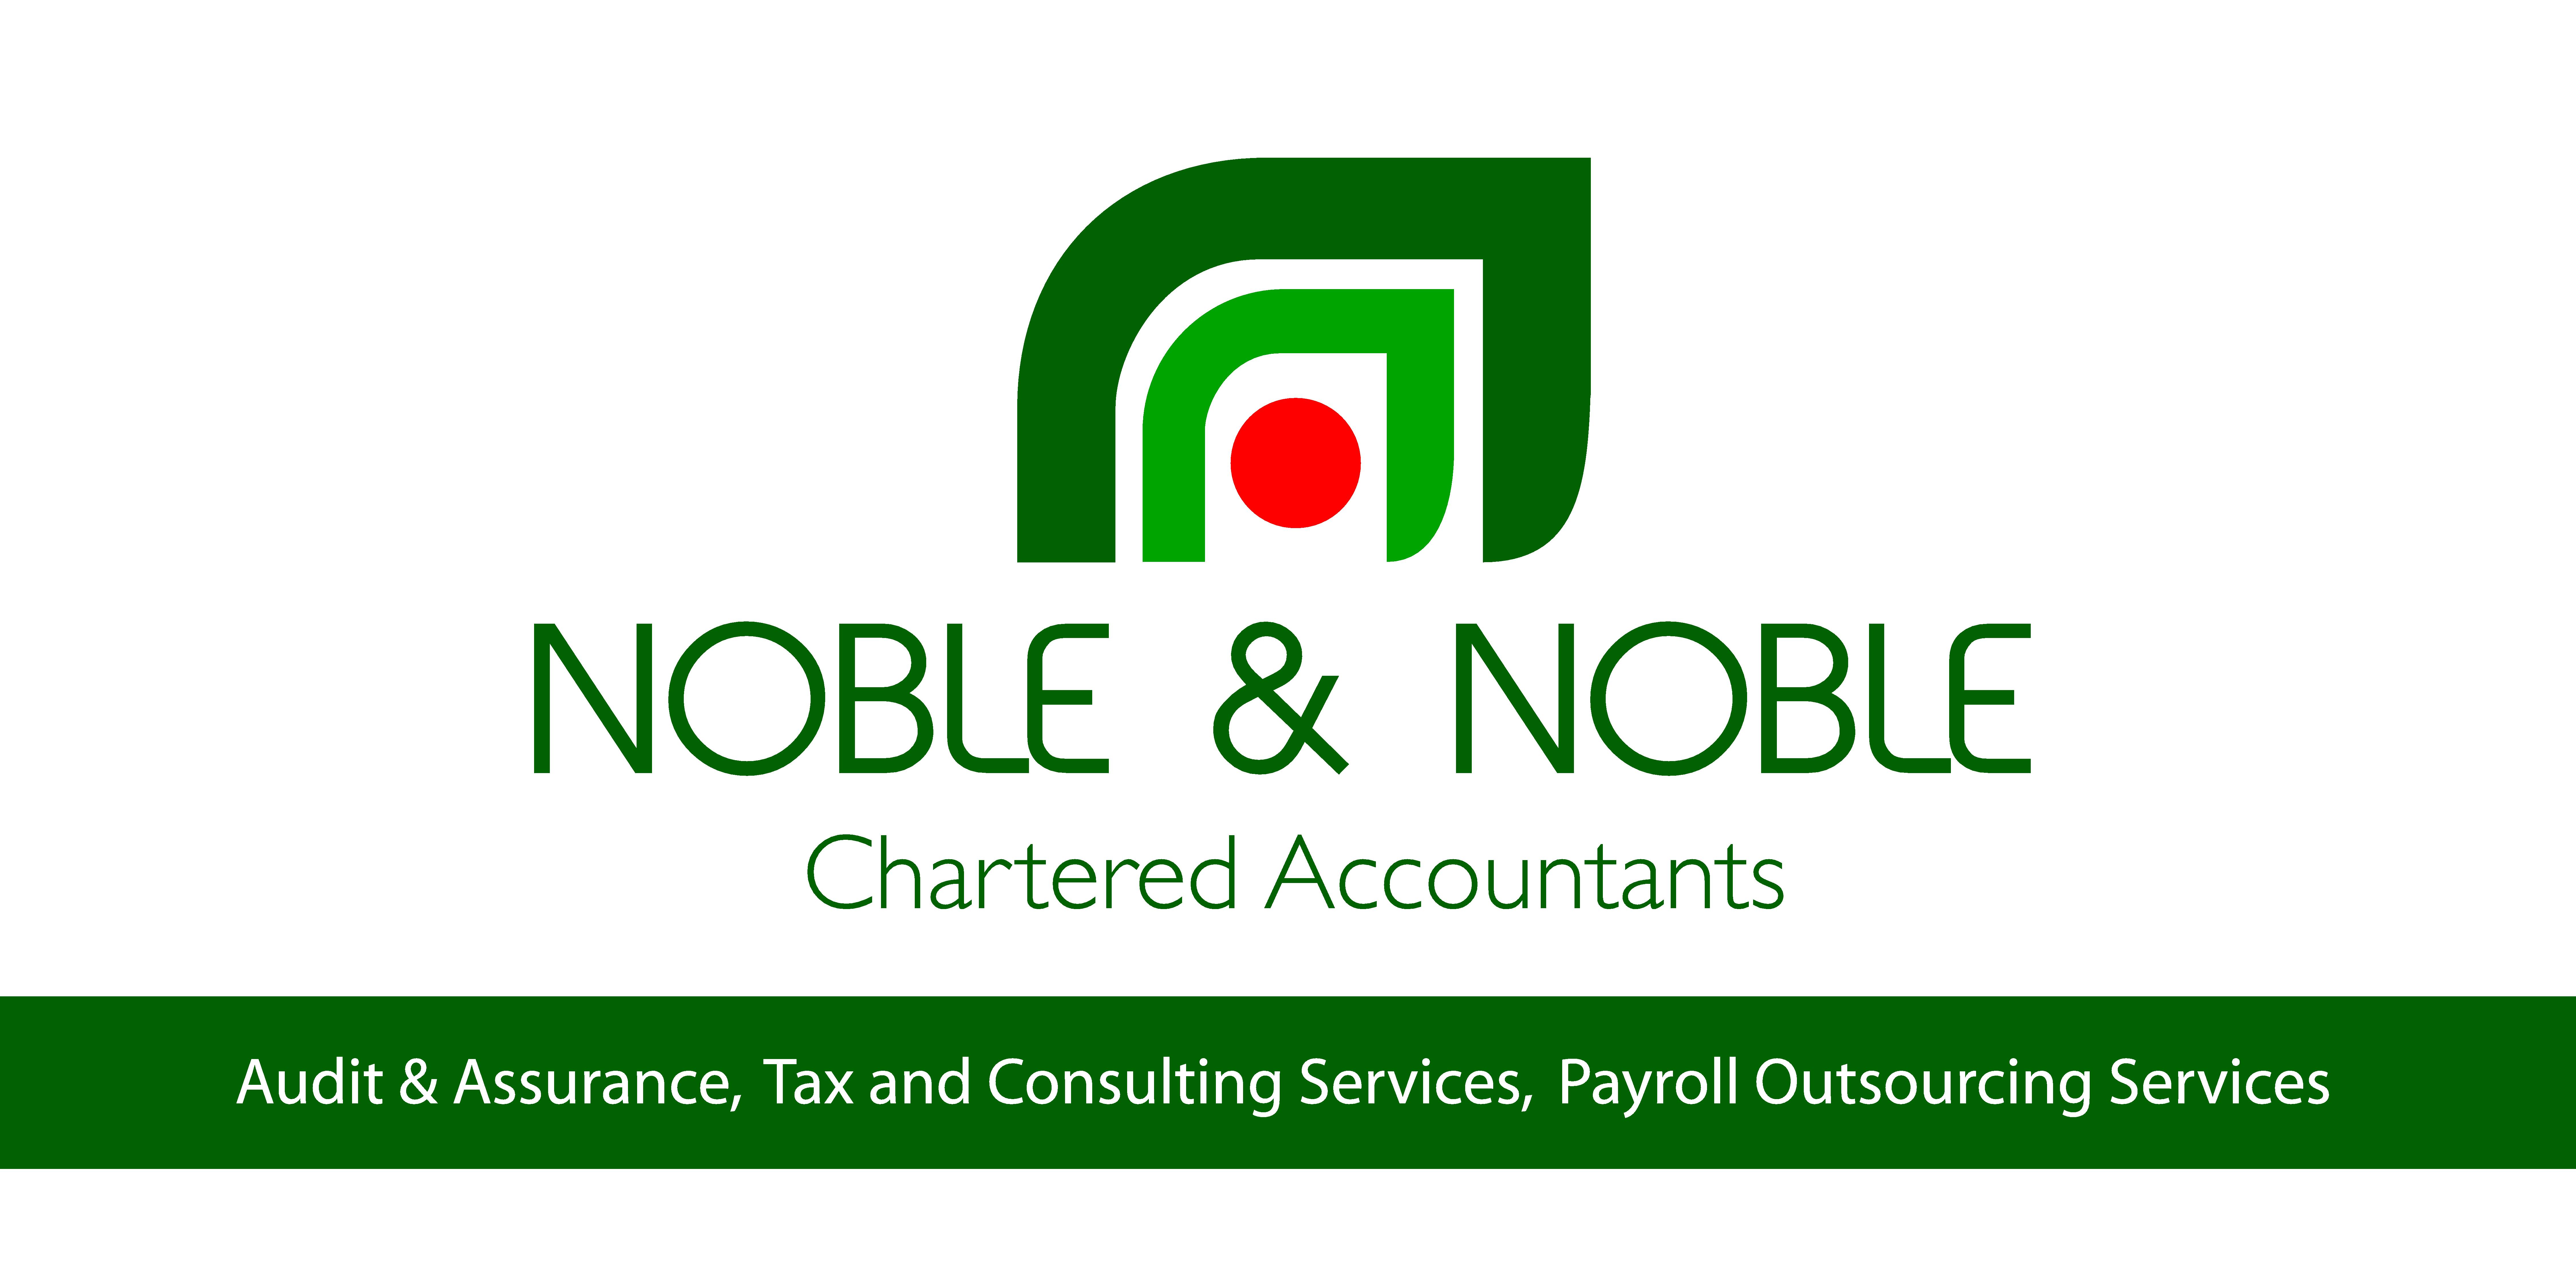 Noble & Noble Chartered Accountants